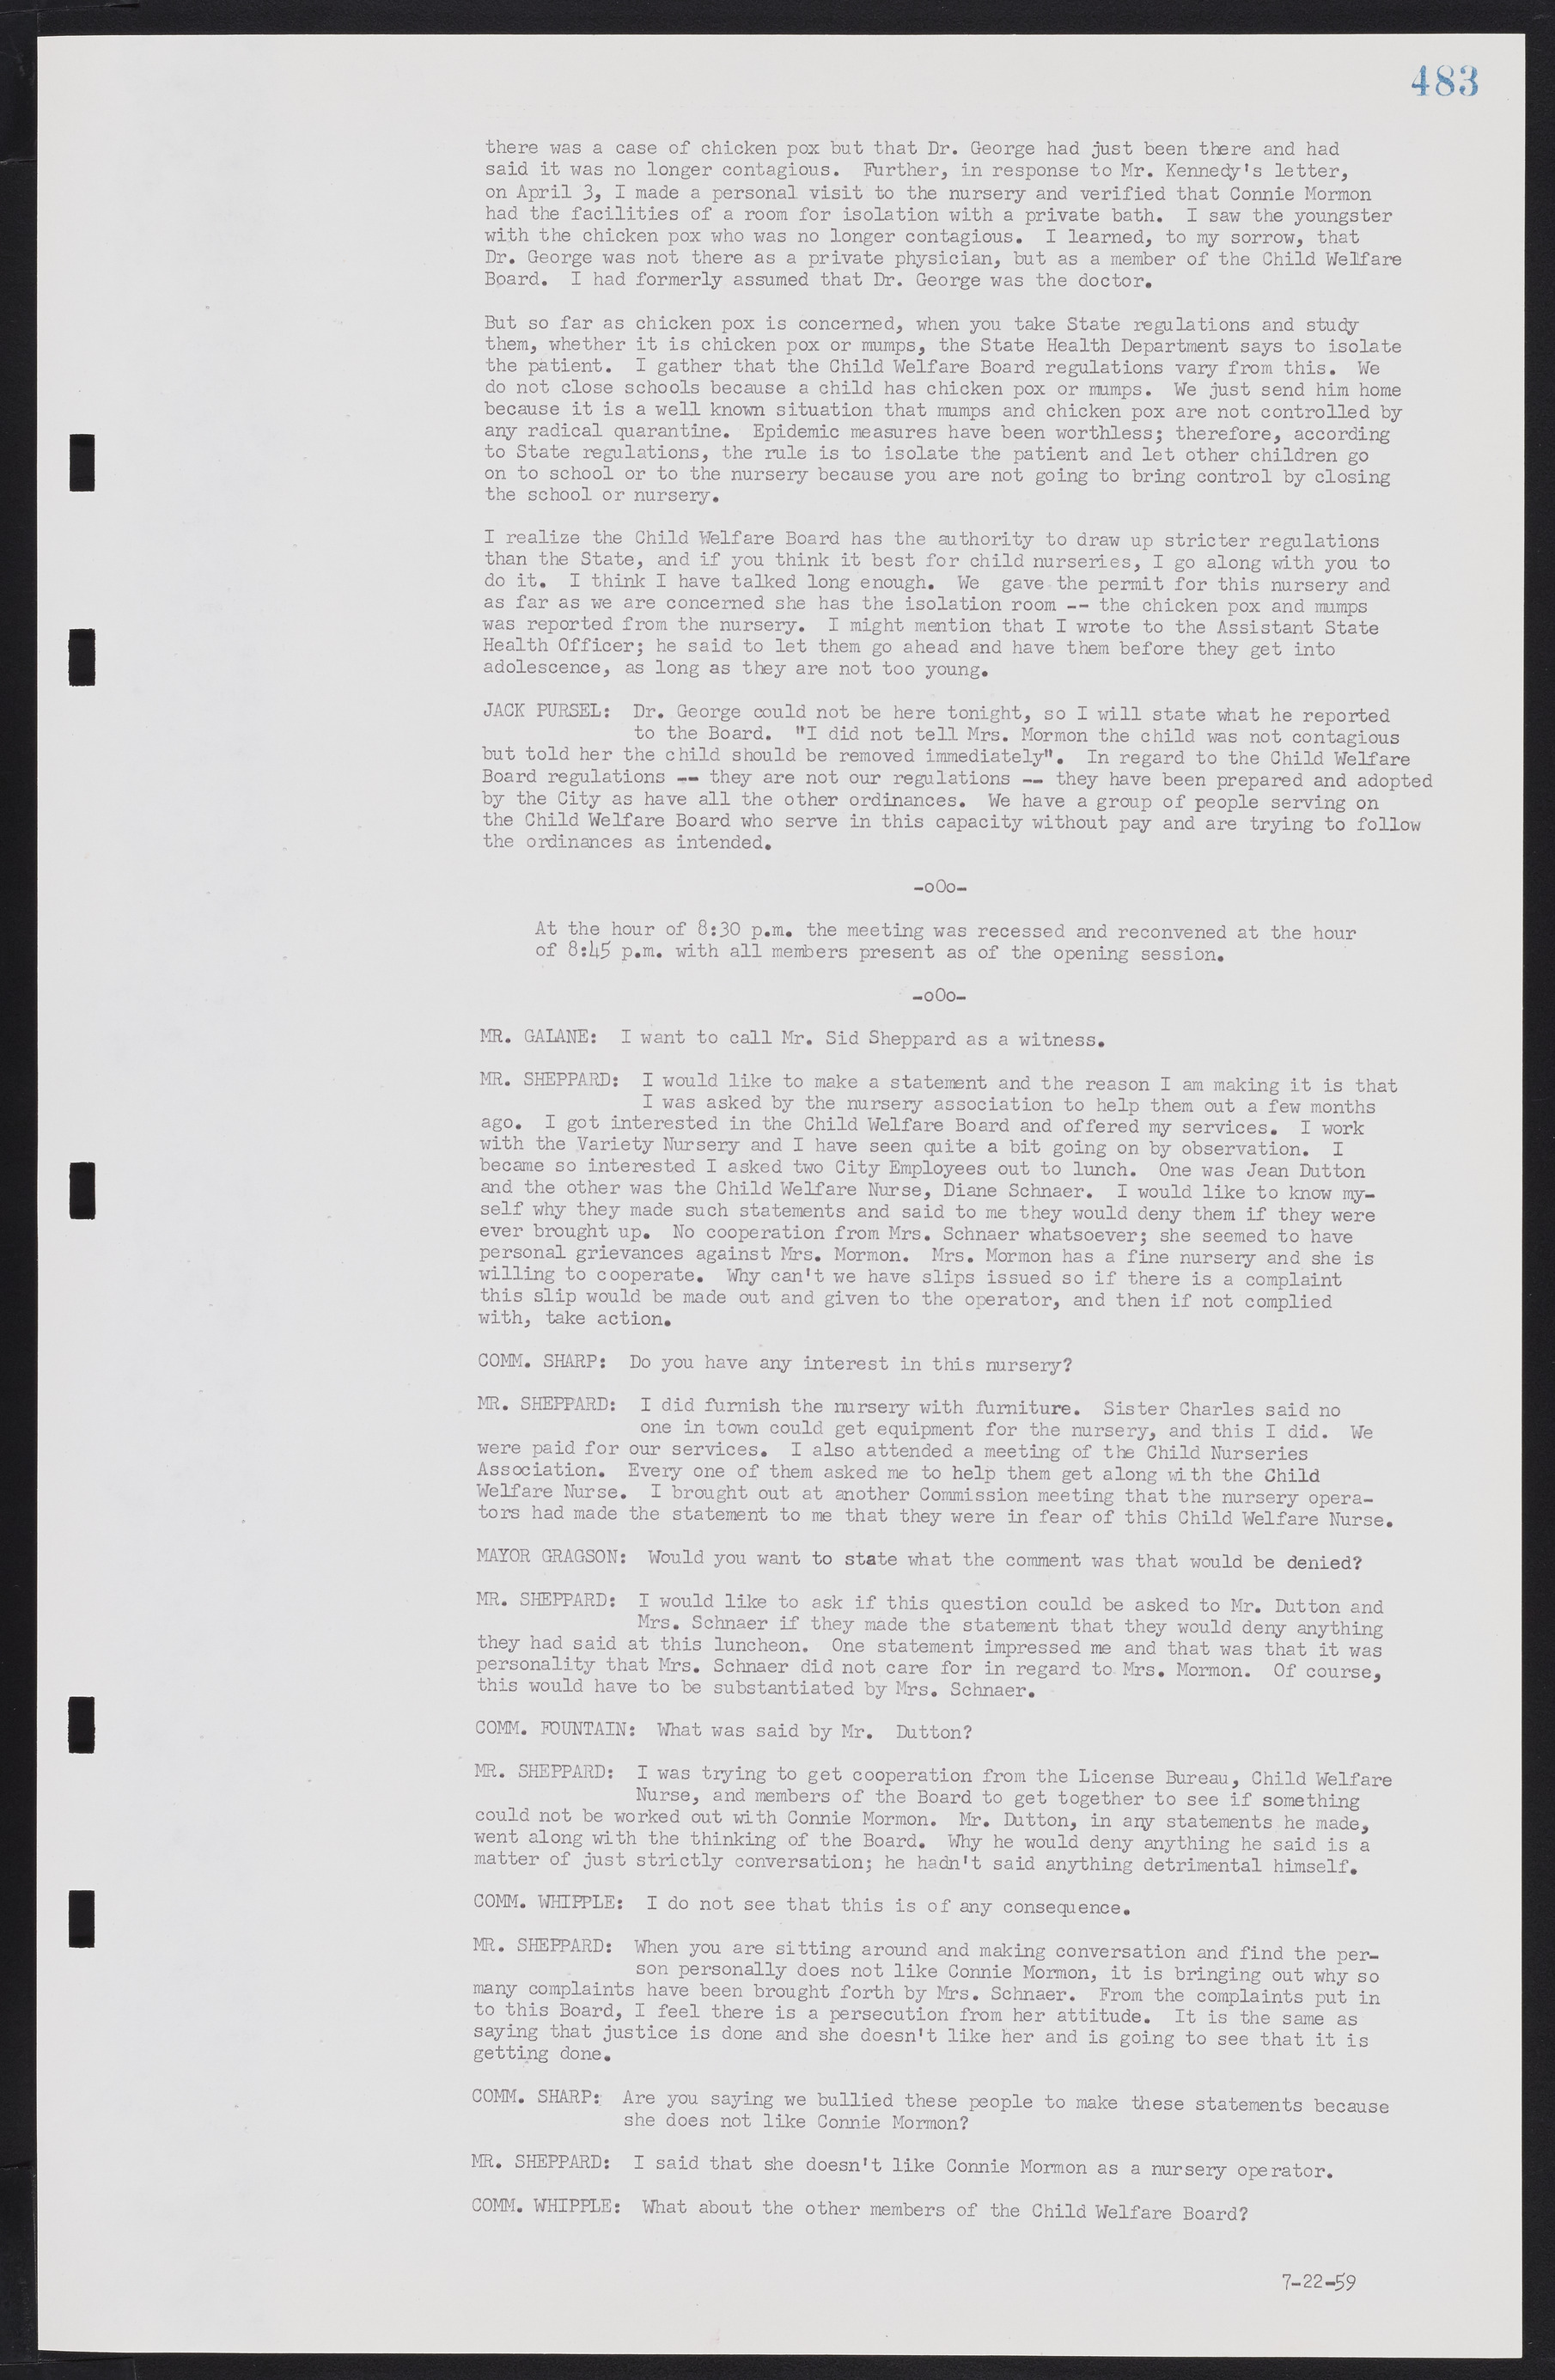 Las Vegas City Commission Minutes, November 20, 1957 to December 2, 1959, lvc000011-519